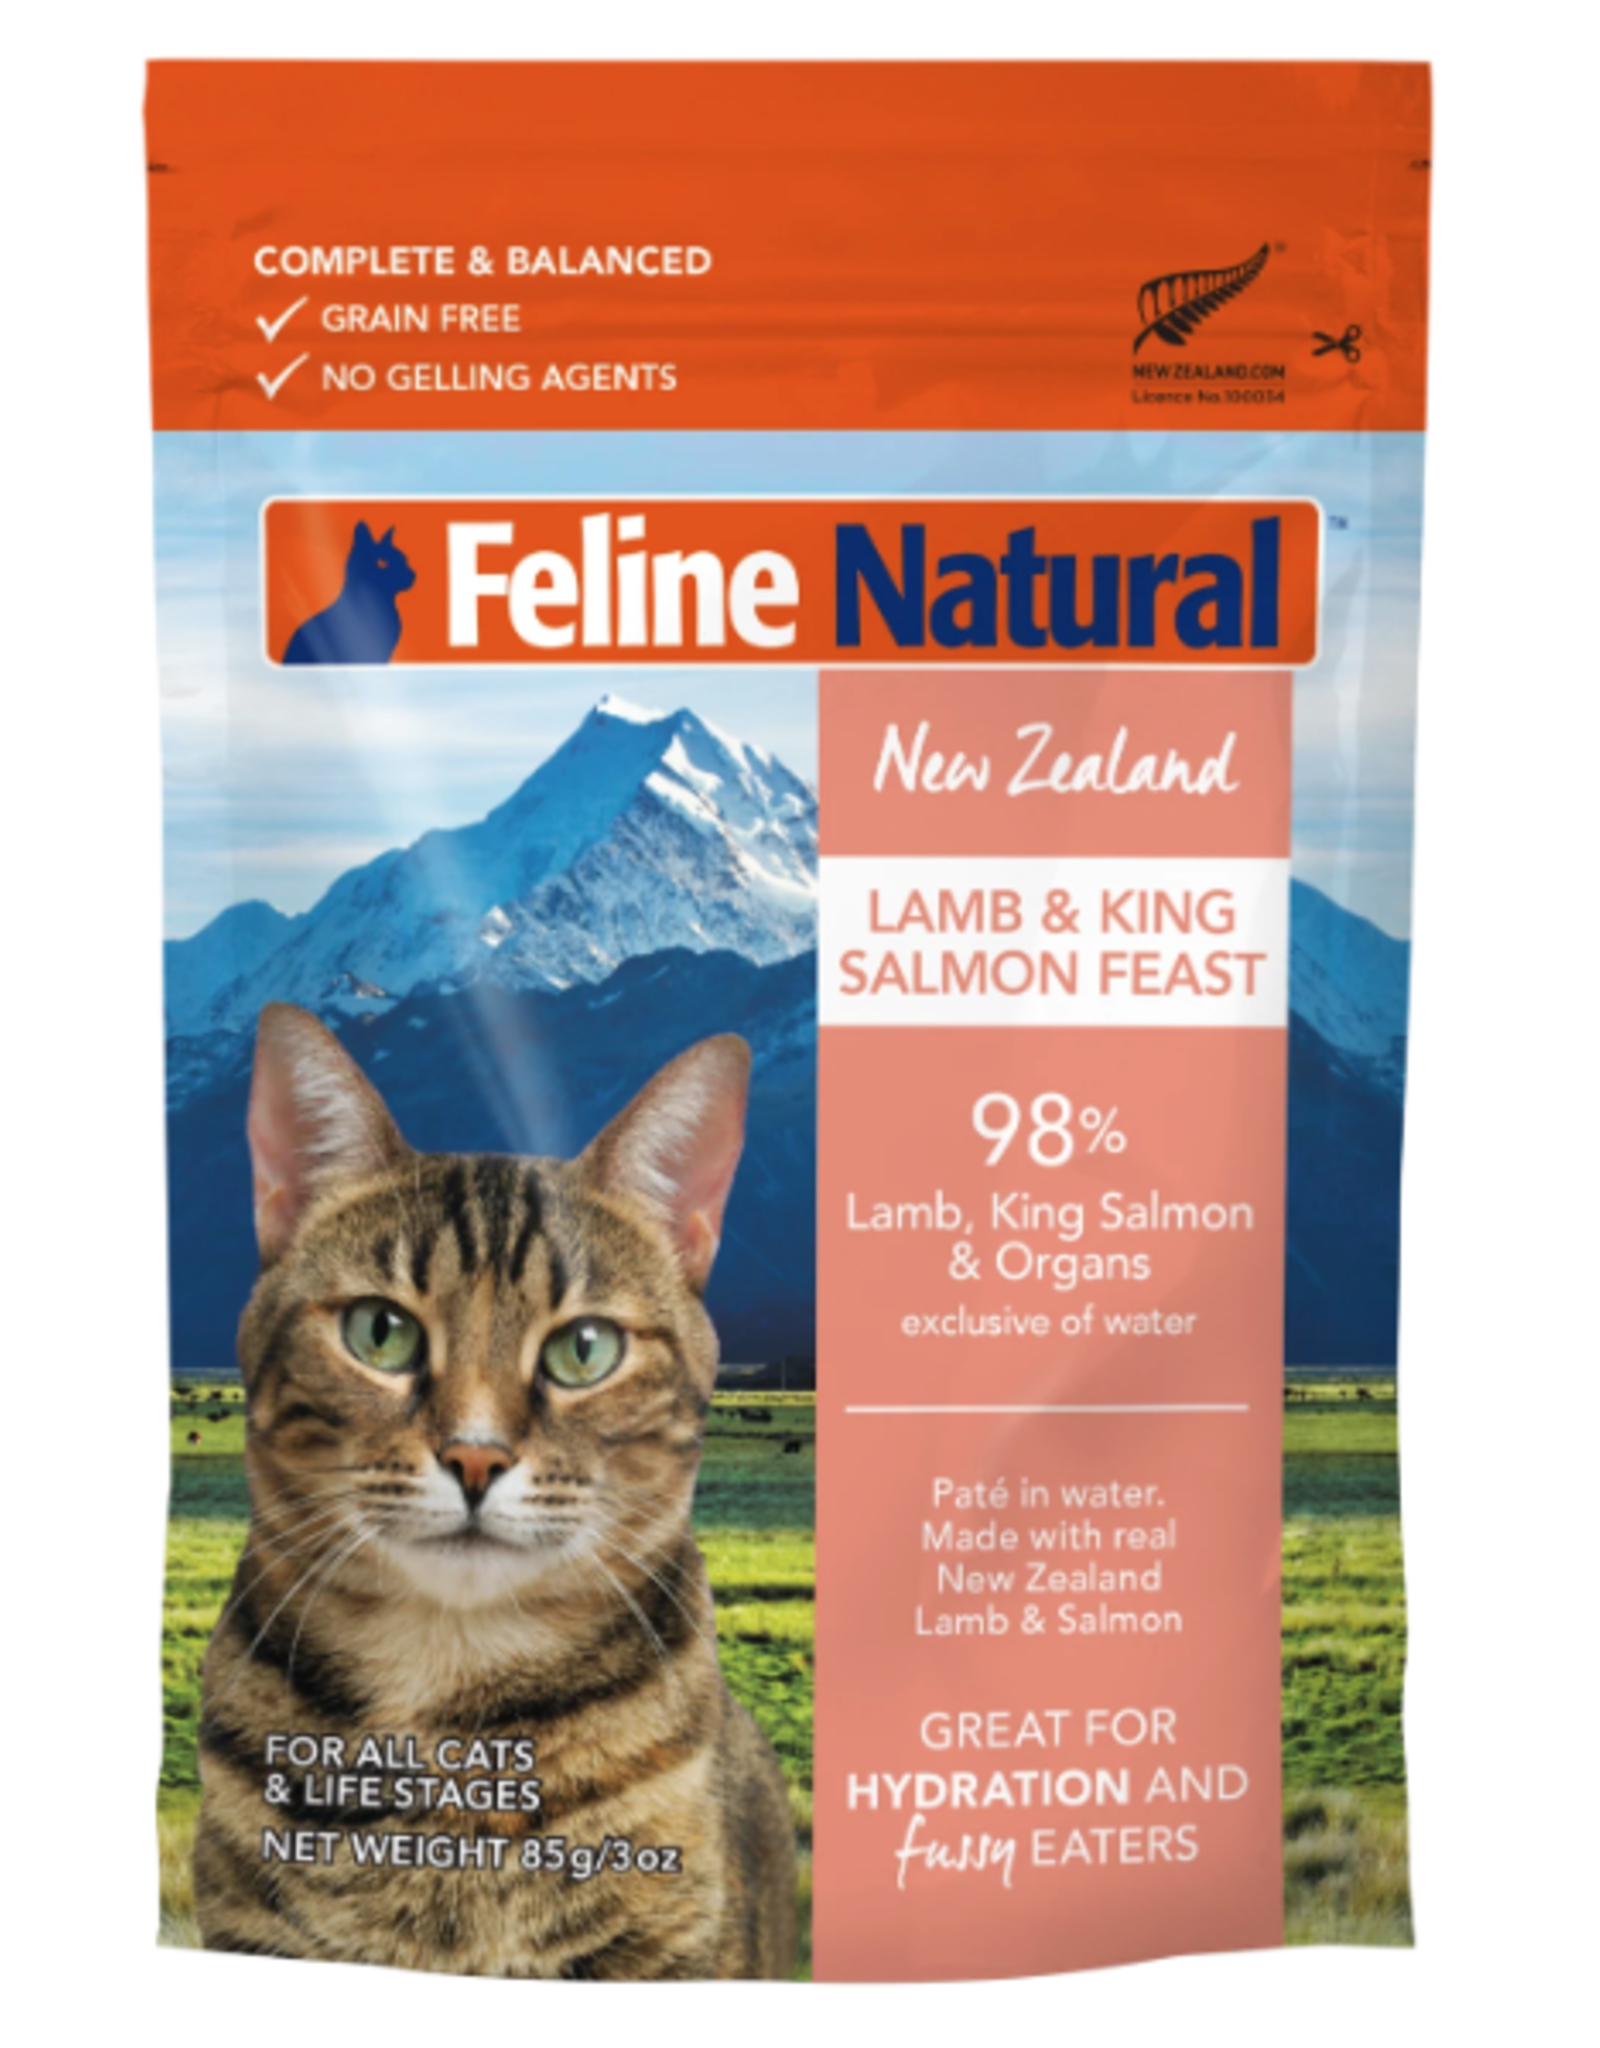 K9 Natural Feline Natural Lamb & King Salmon Feast Cat Food 3oz Pouch